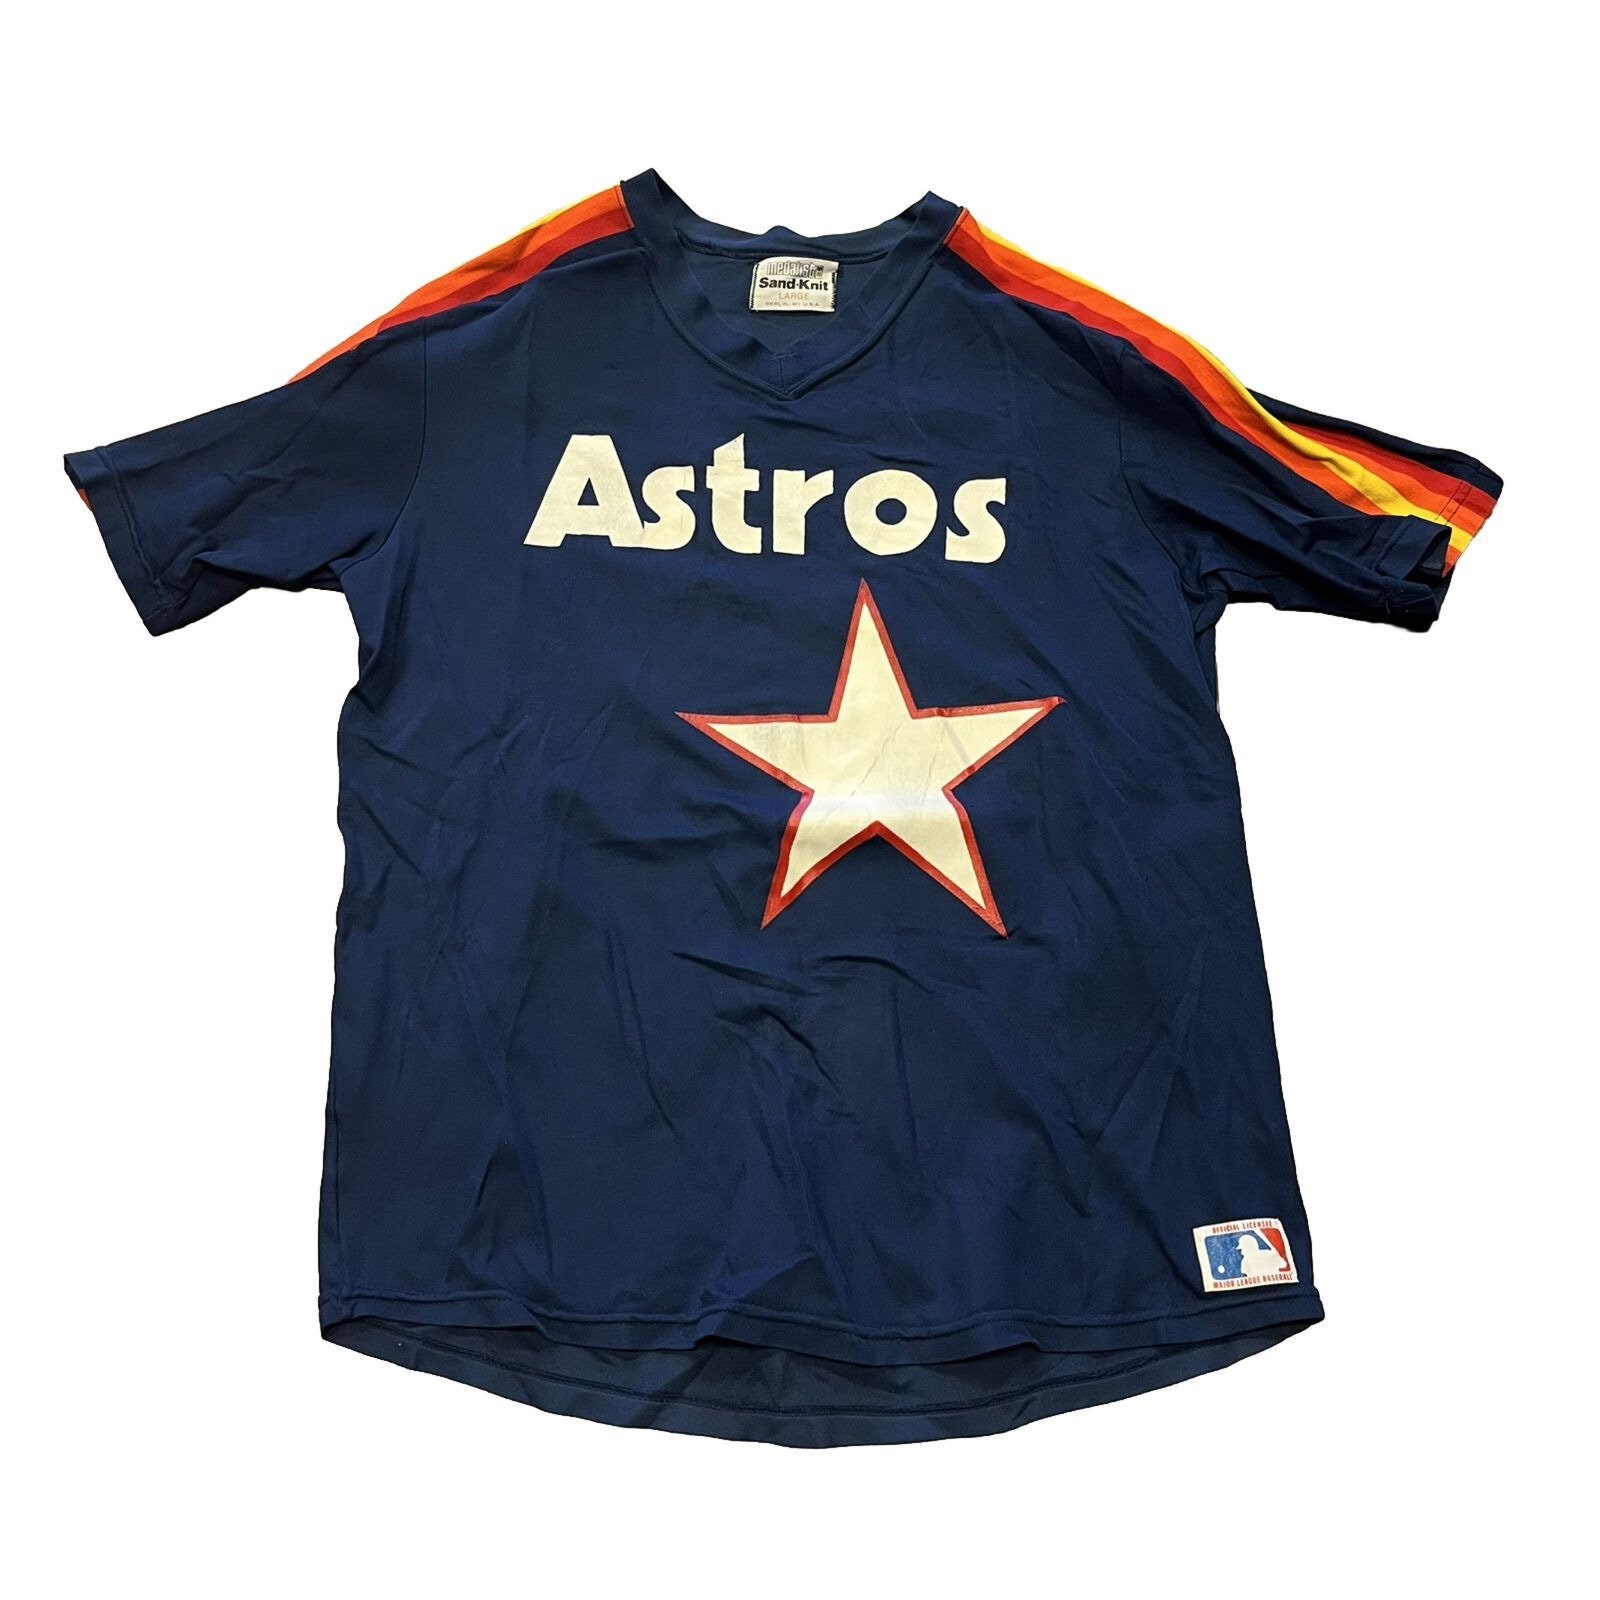 old astros jerseys